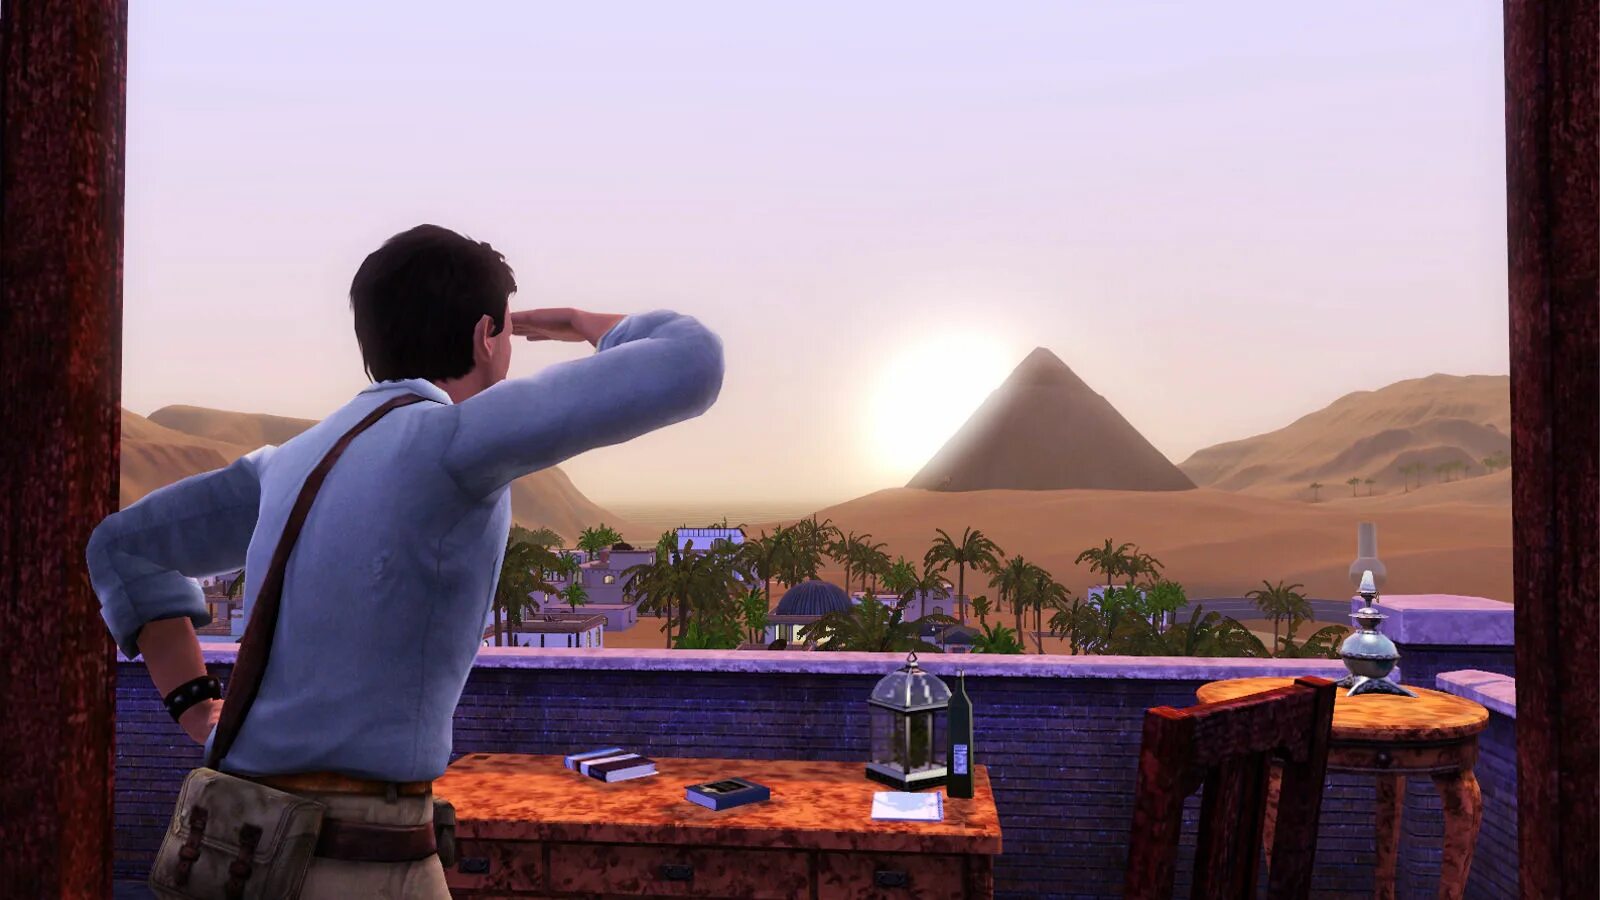 Sims adventures. The SIMS 3 мир приключений. Симс 3 путешествия. Симс 3 World Adventures. SIMS 3 Worlds.